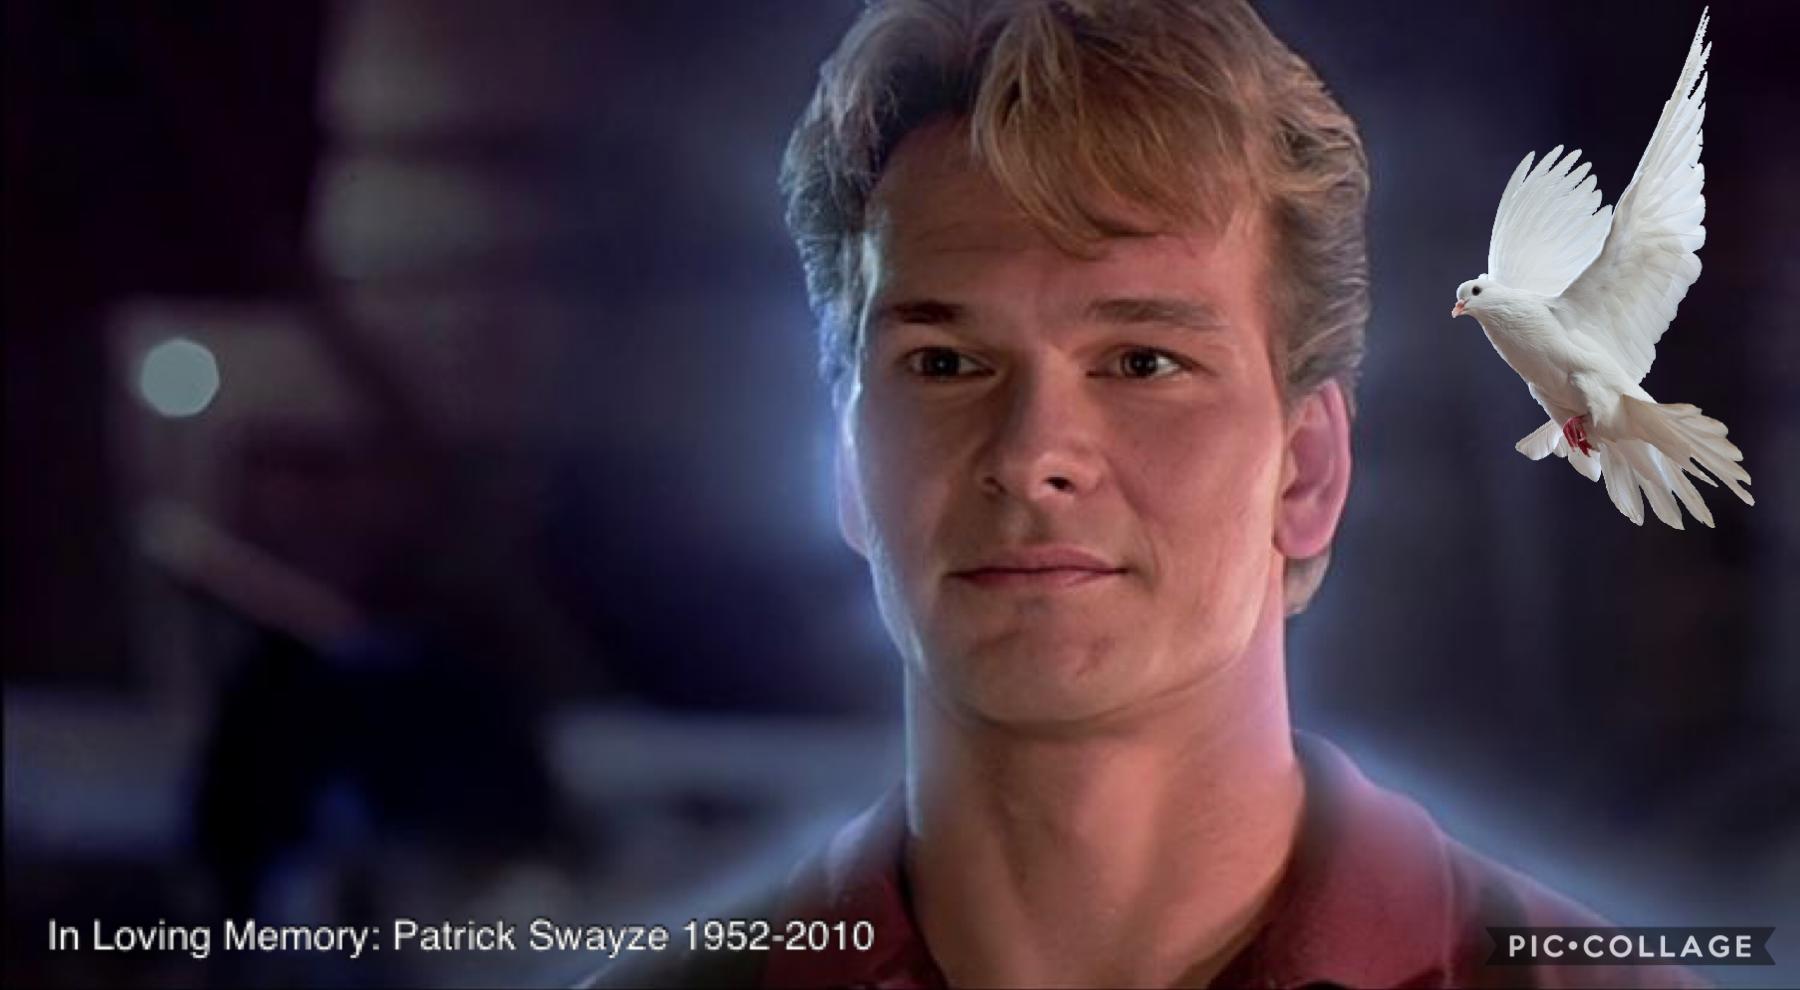 In Loving Memory: Patrick Swayze 1952-2010